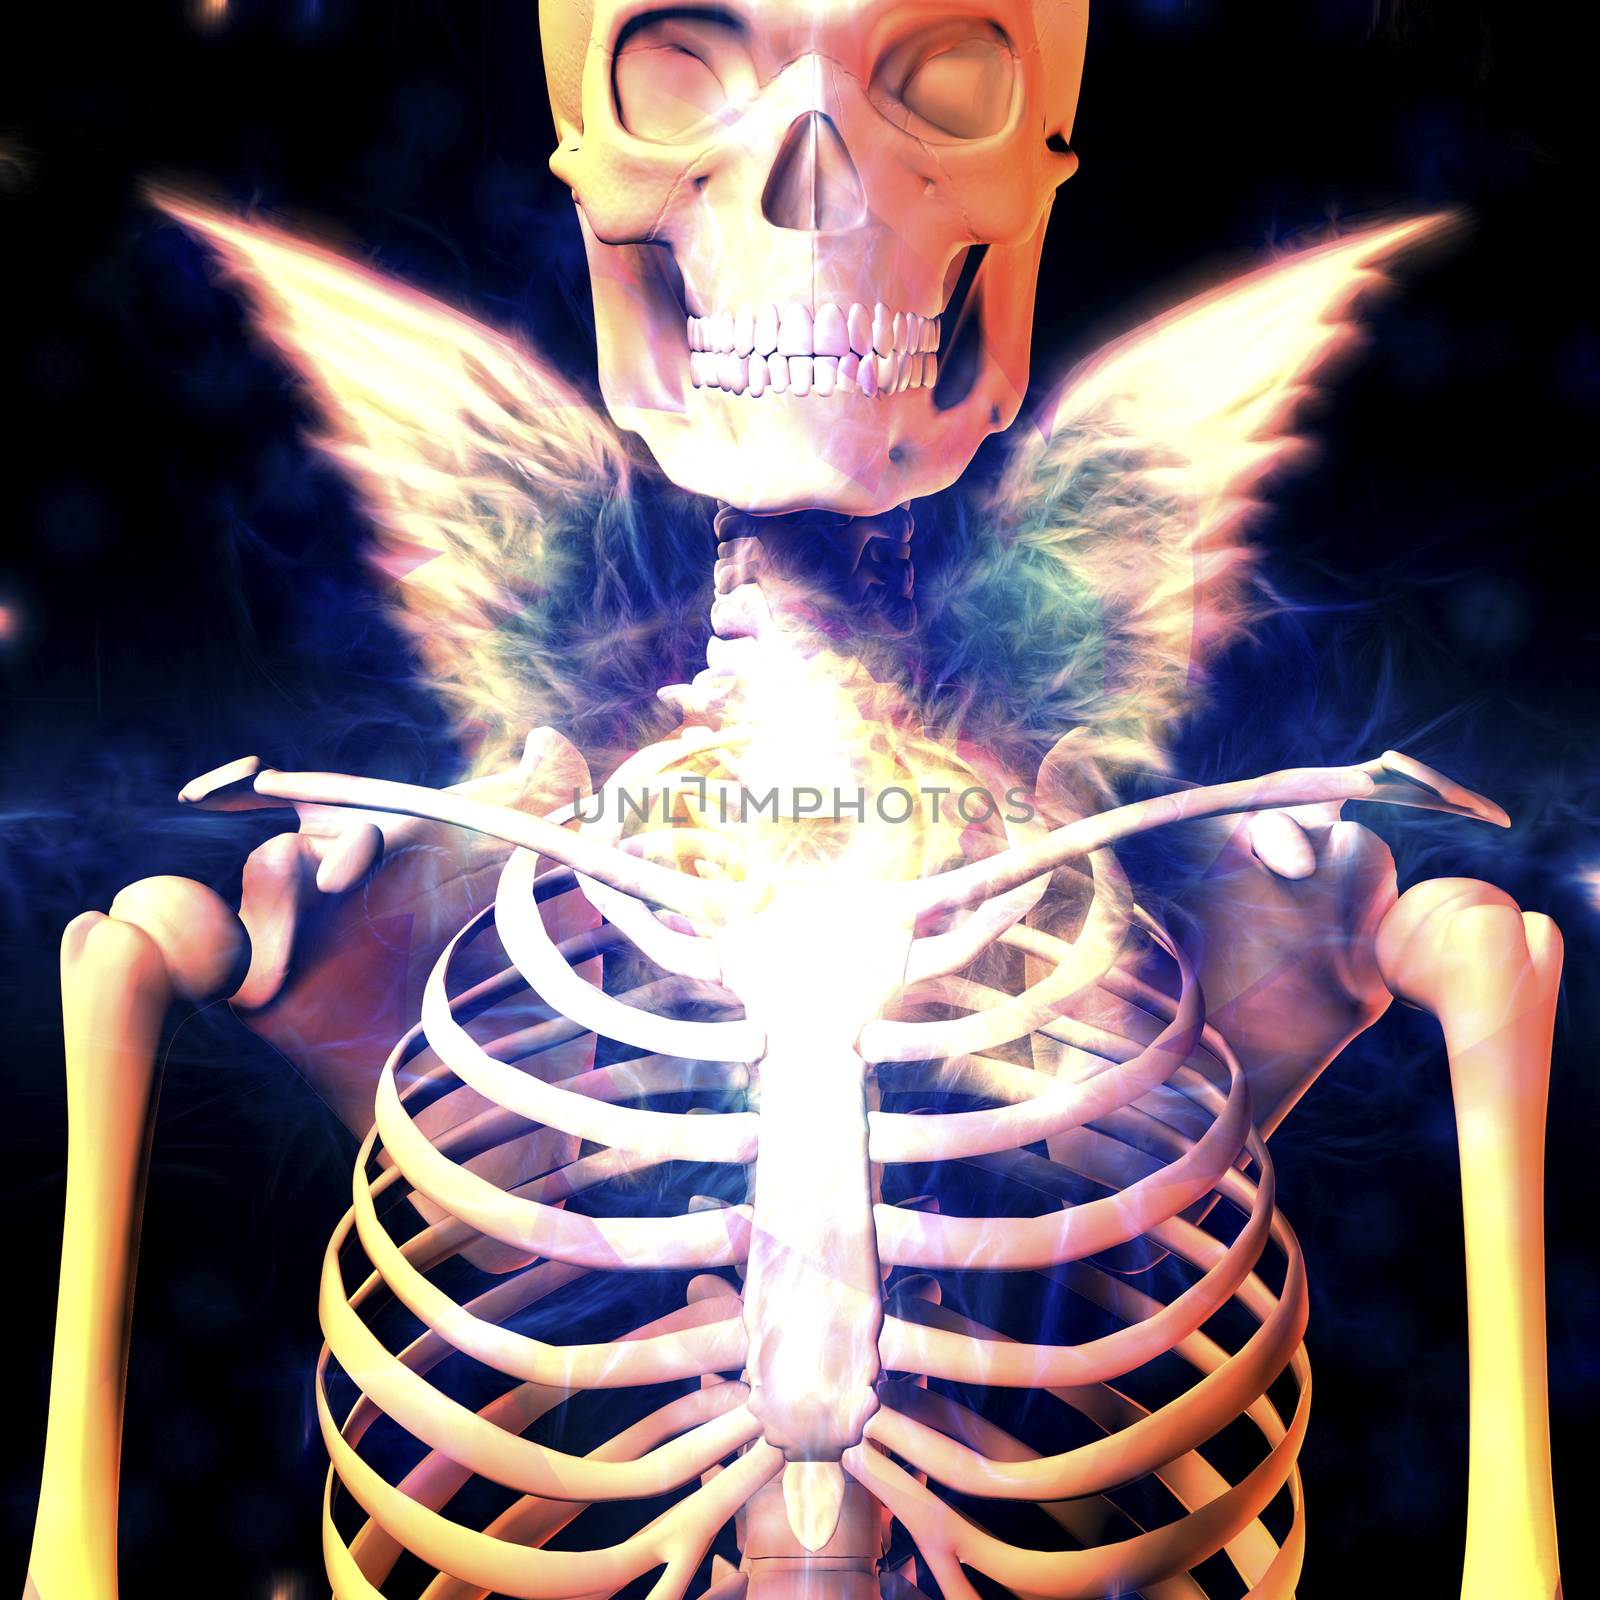 Human skeleton with glowing wings